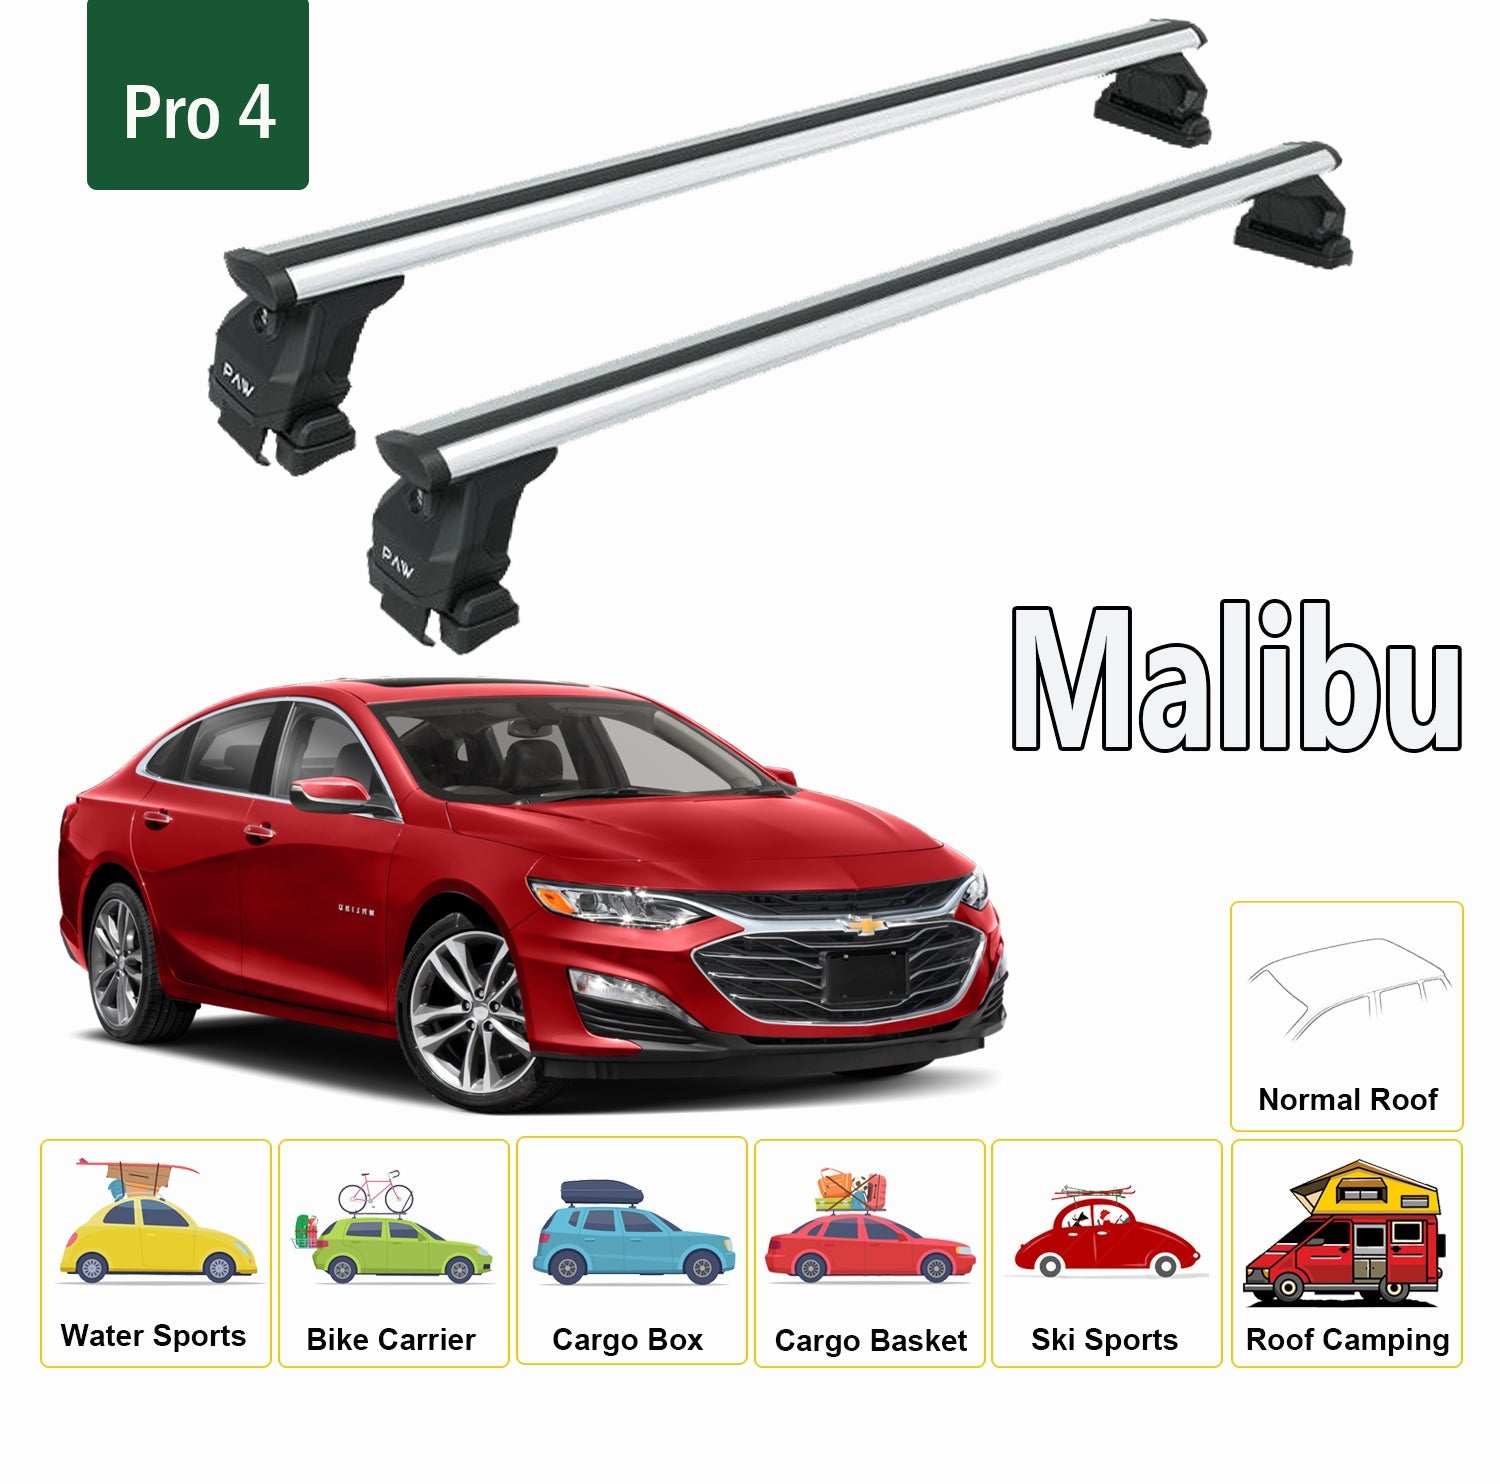 For Chevrolet Malibu 2004-Up Roof Rack System, Aluminium Cross Bar, Metal Bracket, Normal Roof, Black